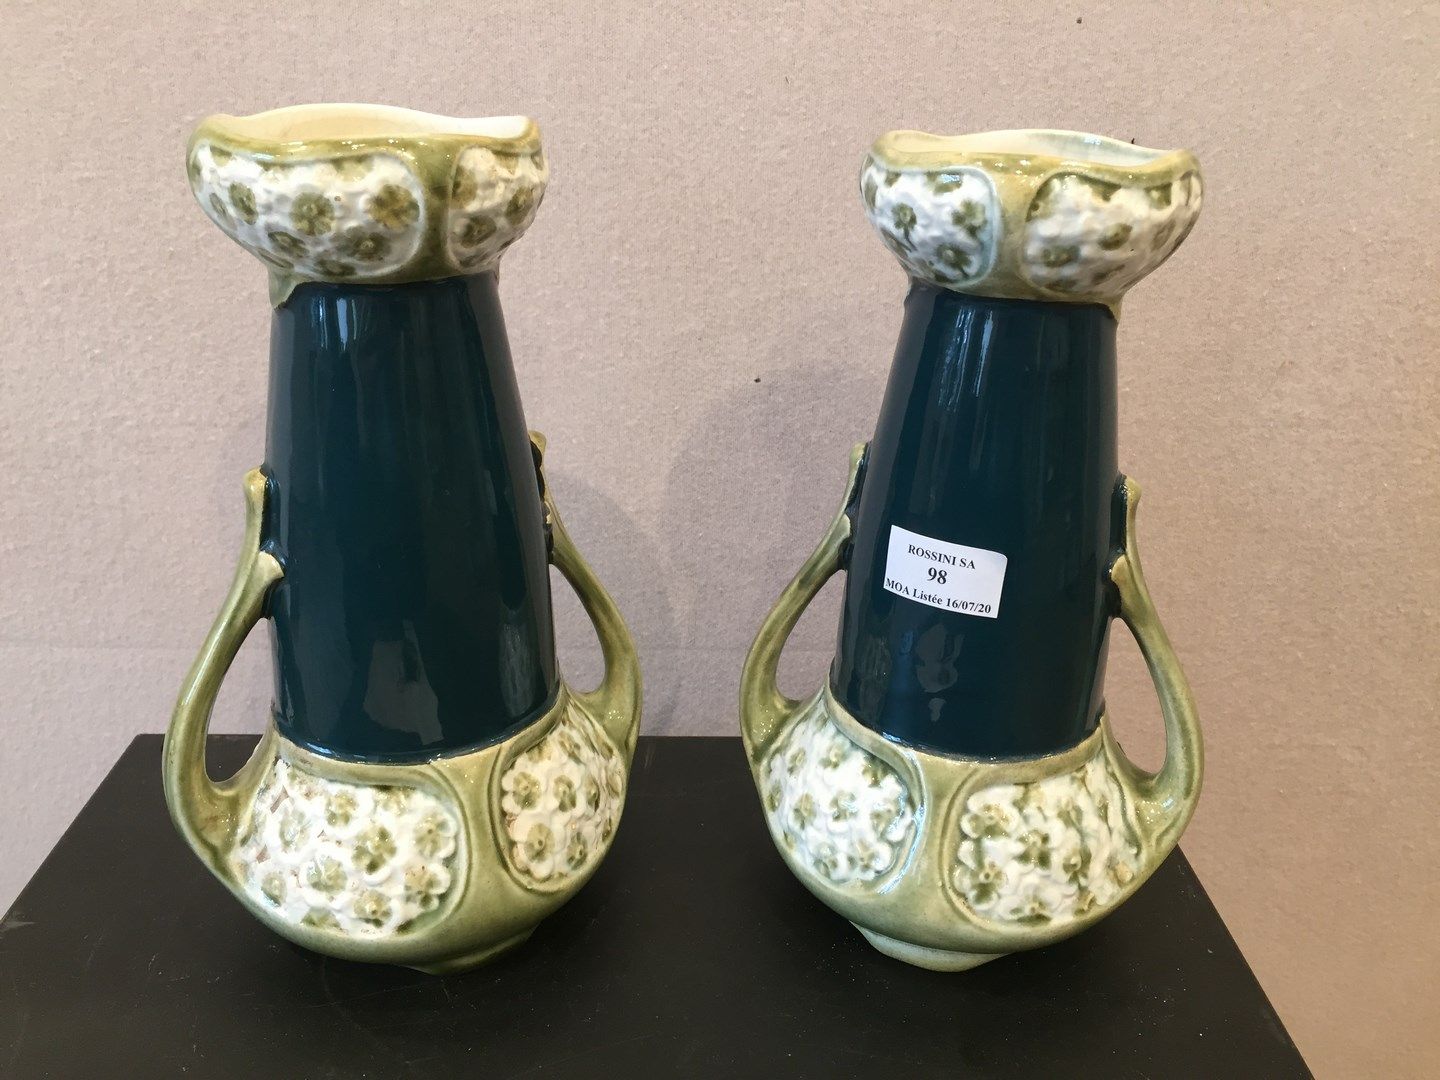 Null GUSTAVE DE BRUYON

Pair of earthenware vases, 

H. 27.5 cm